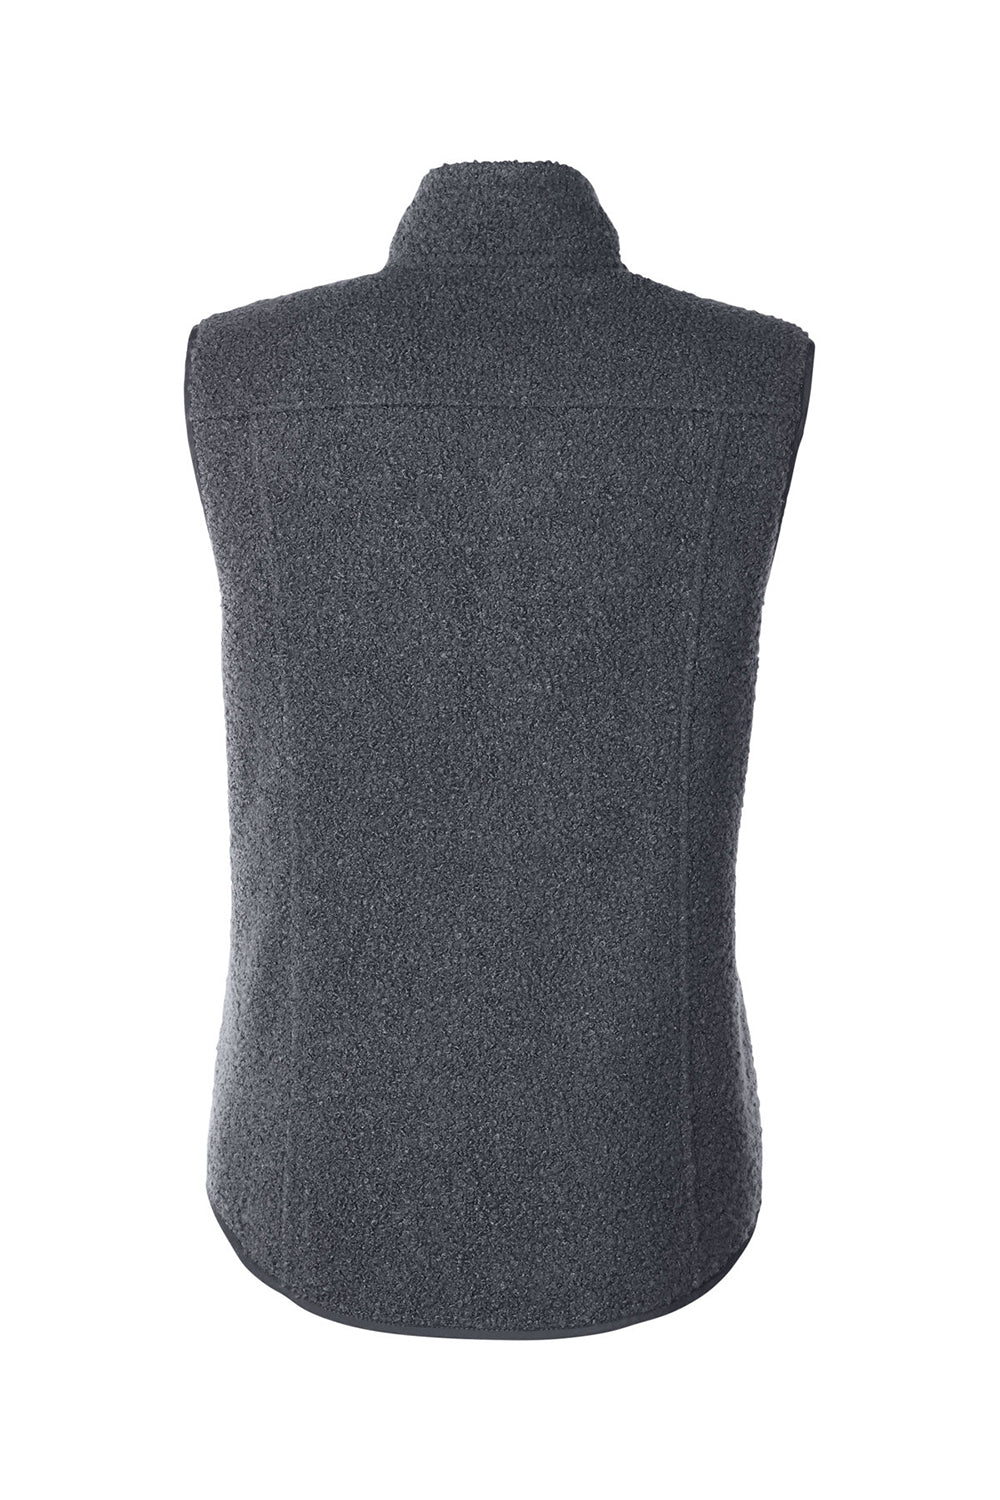 North End NE714W Womens Aura Sweater Fleece Full Zip Vest Carbon Grey Flat Back